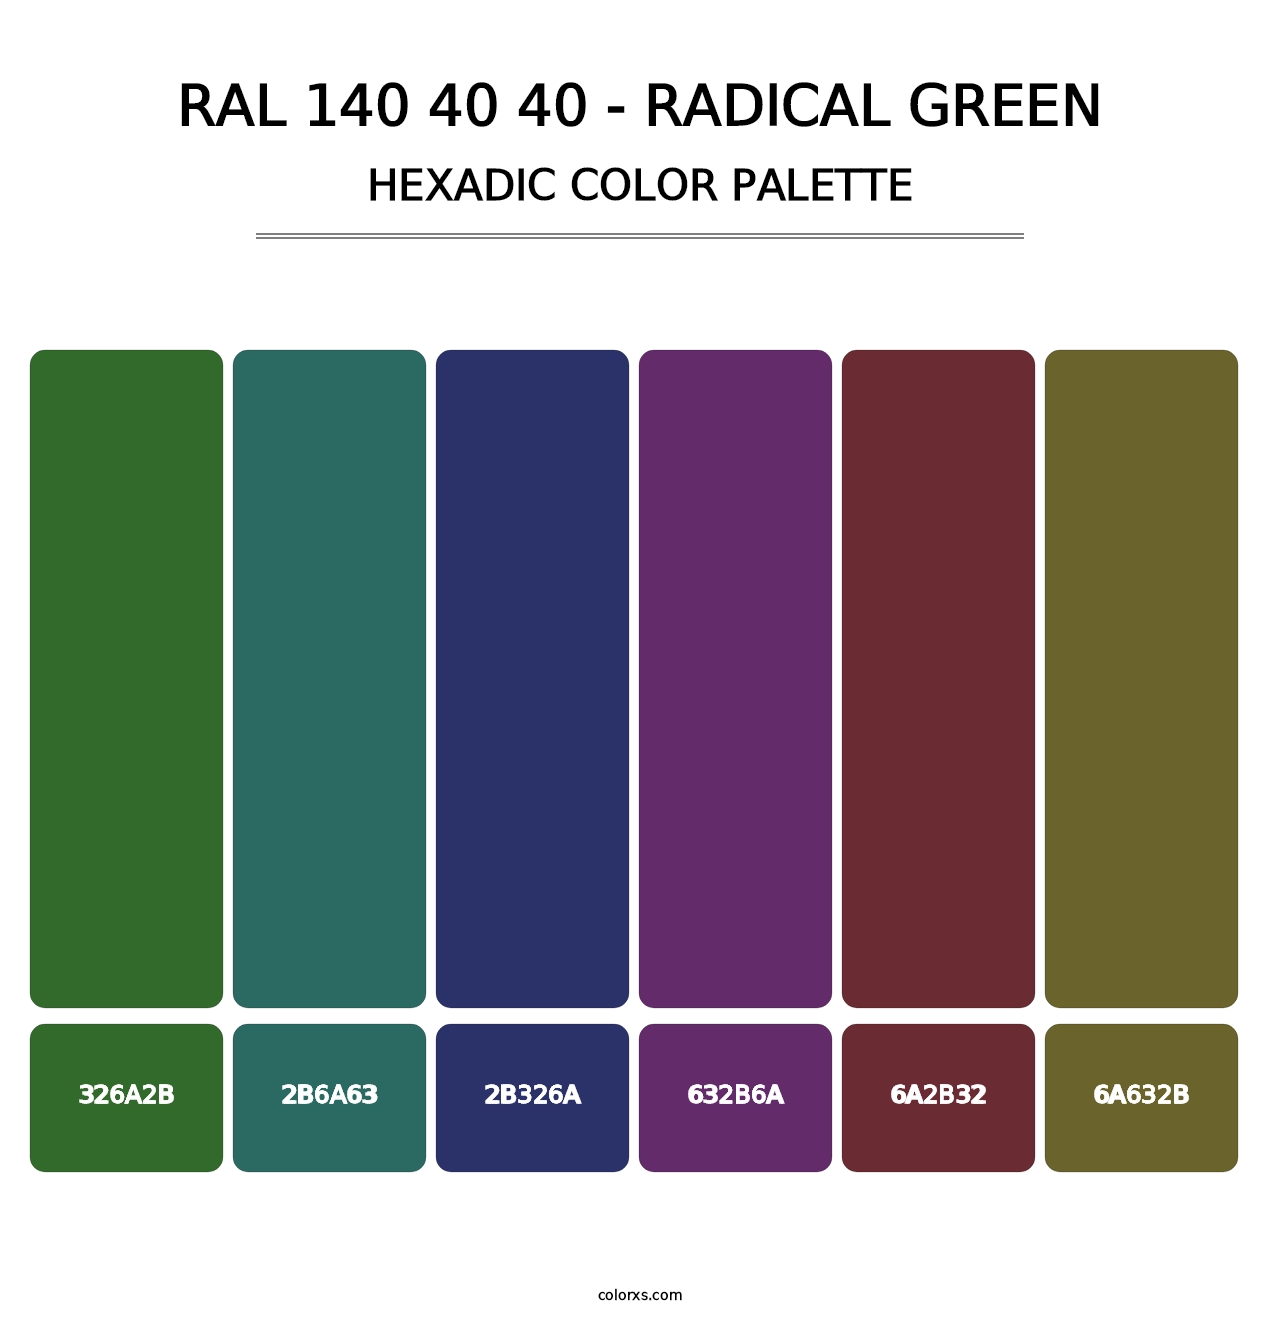 RAL 140 40 40 - Radical Green - Hexadic Color Palette